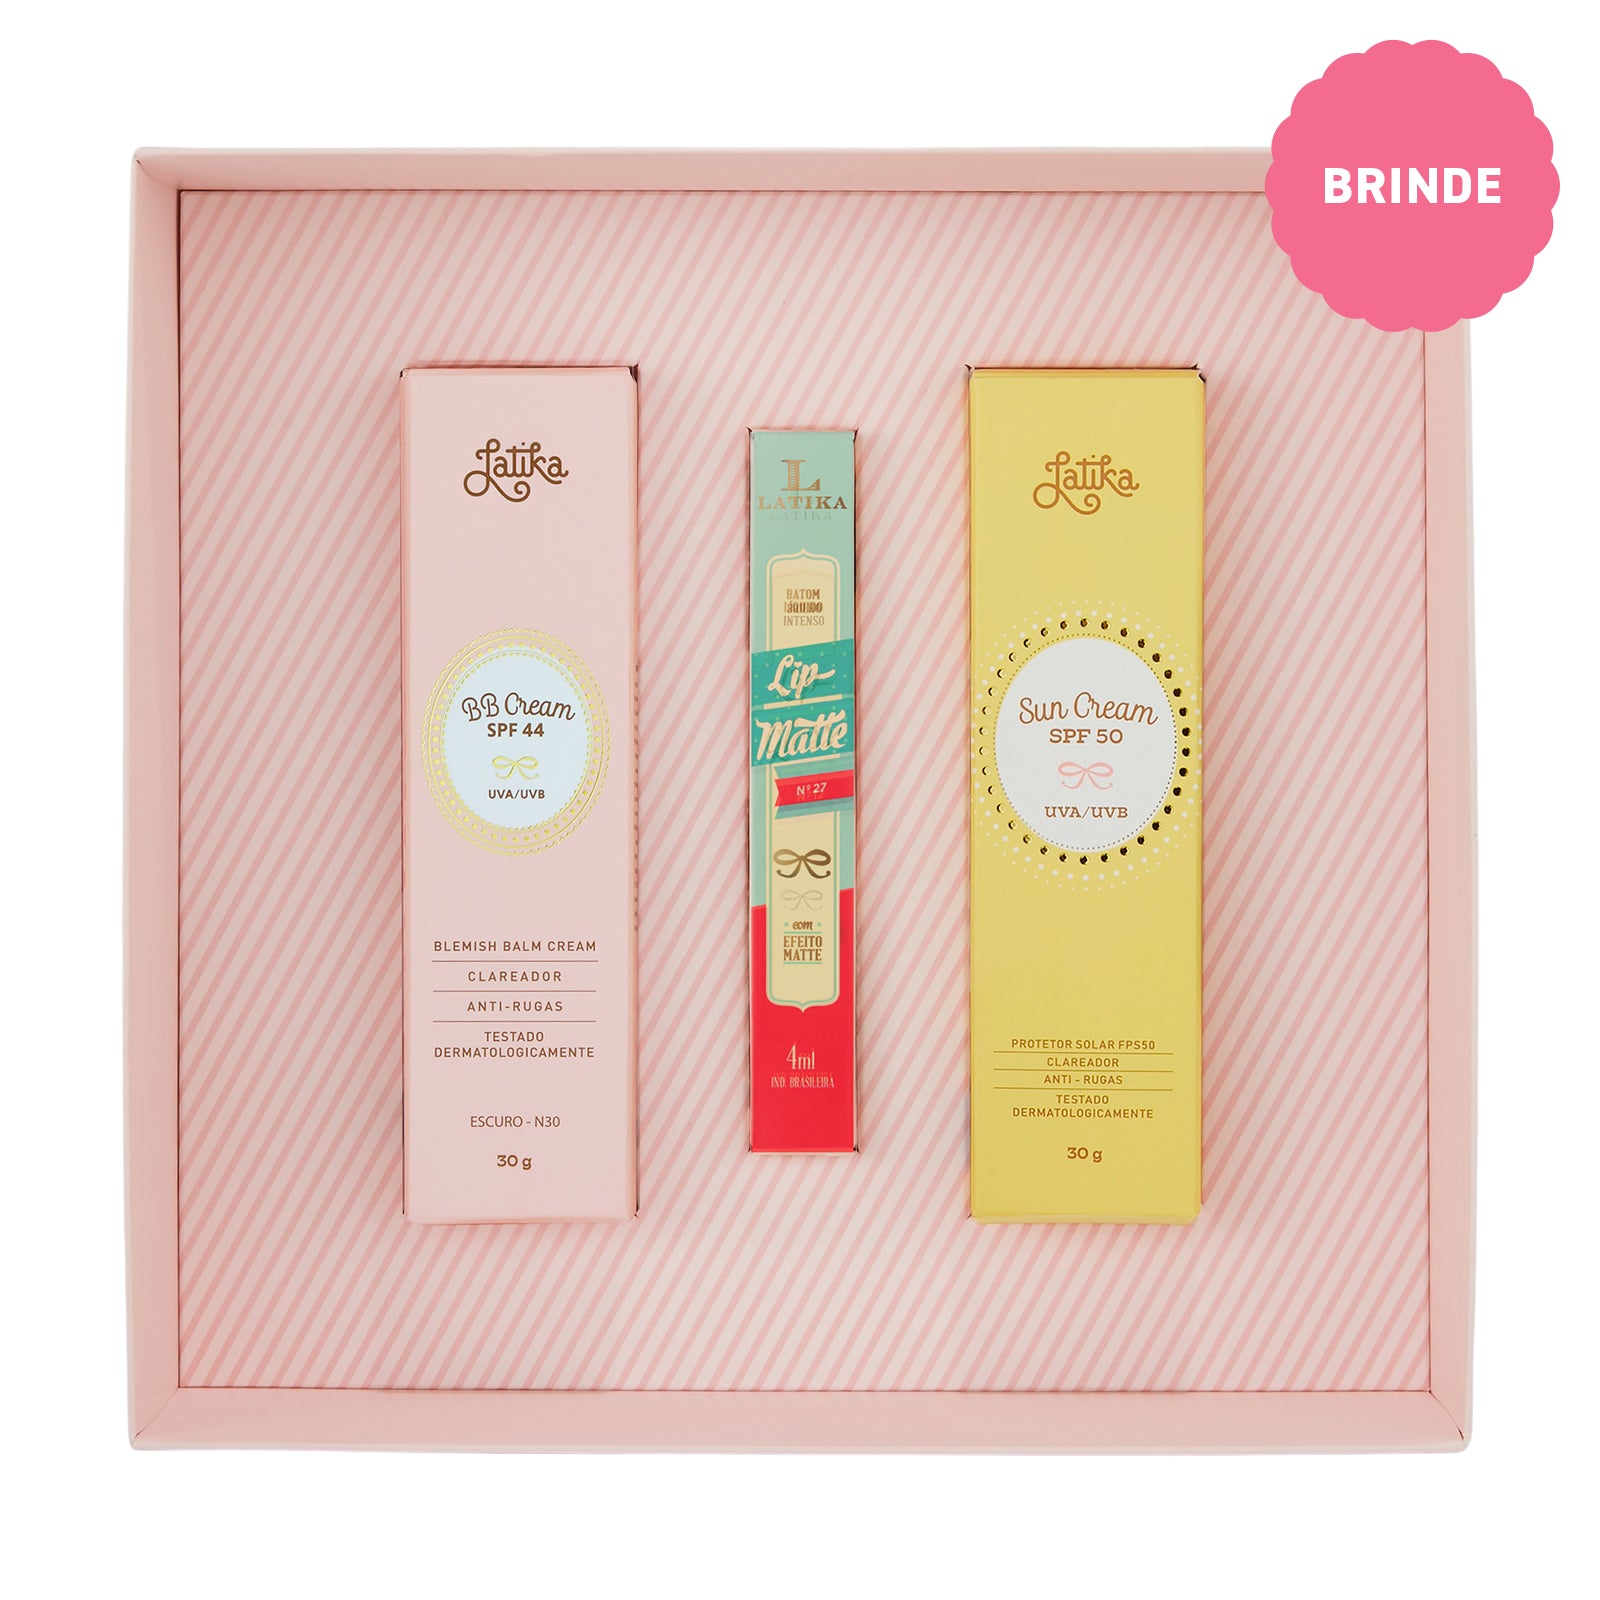 Sweet Box Edição Especial - BB Cream + Sun Cream + Brinde Lip Matte